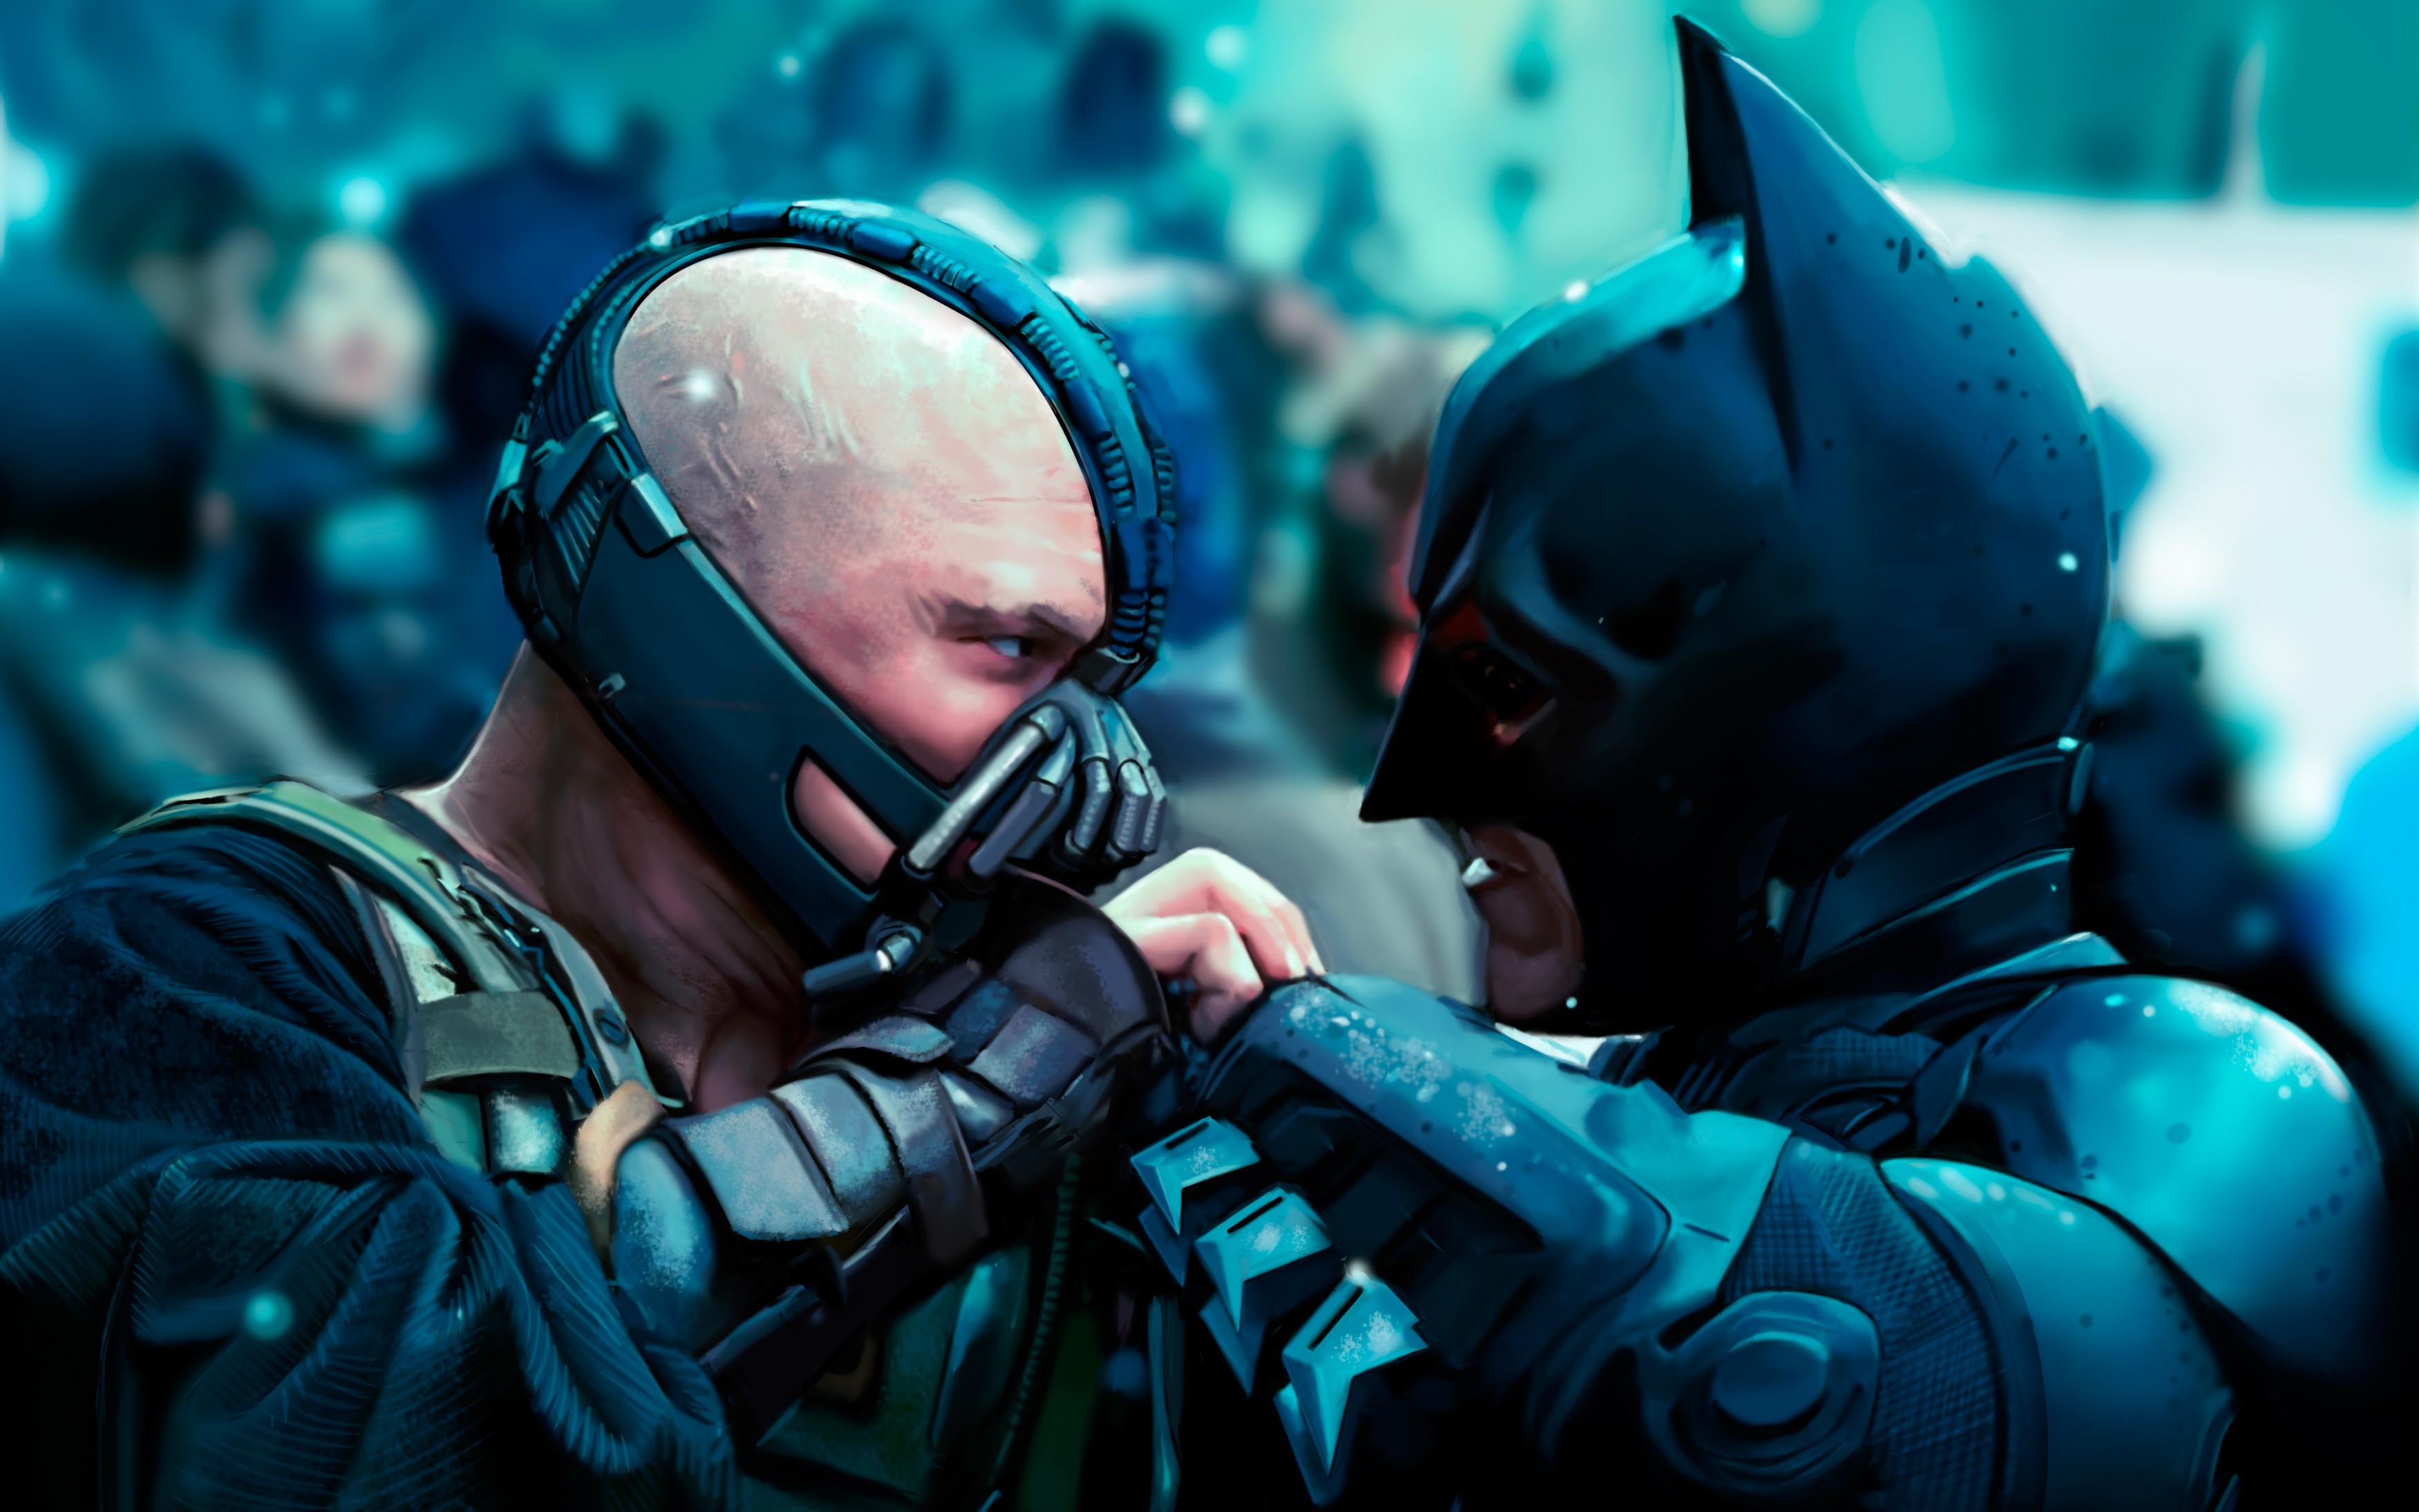 Batman Bane The Dark Knight Rises Movies 2012 Year 3500x2188